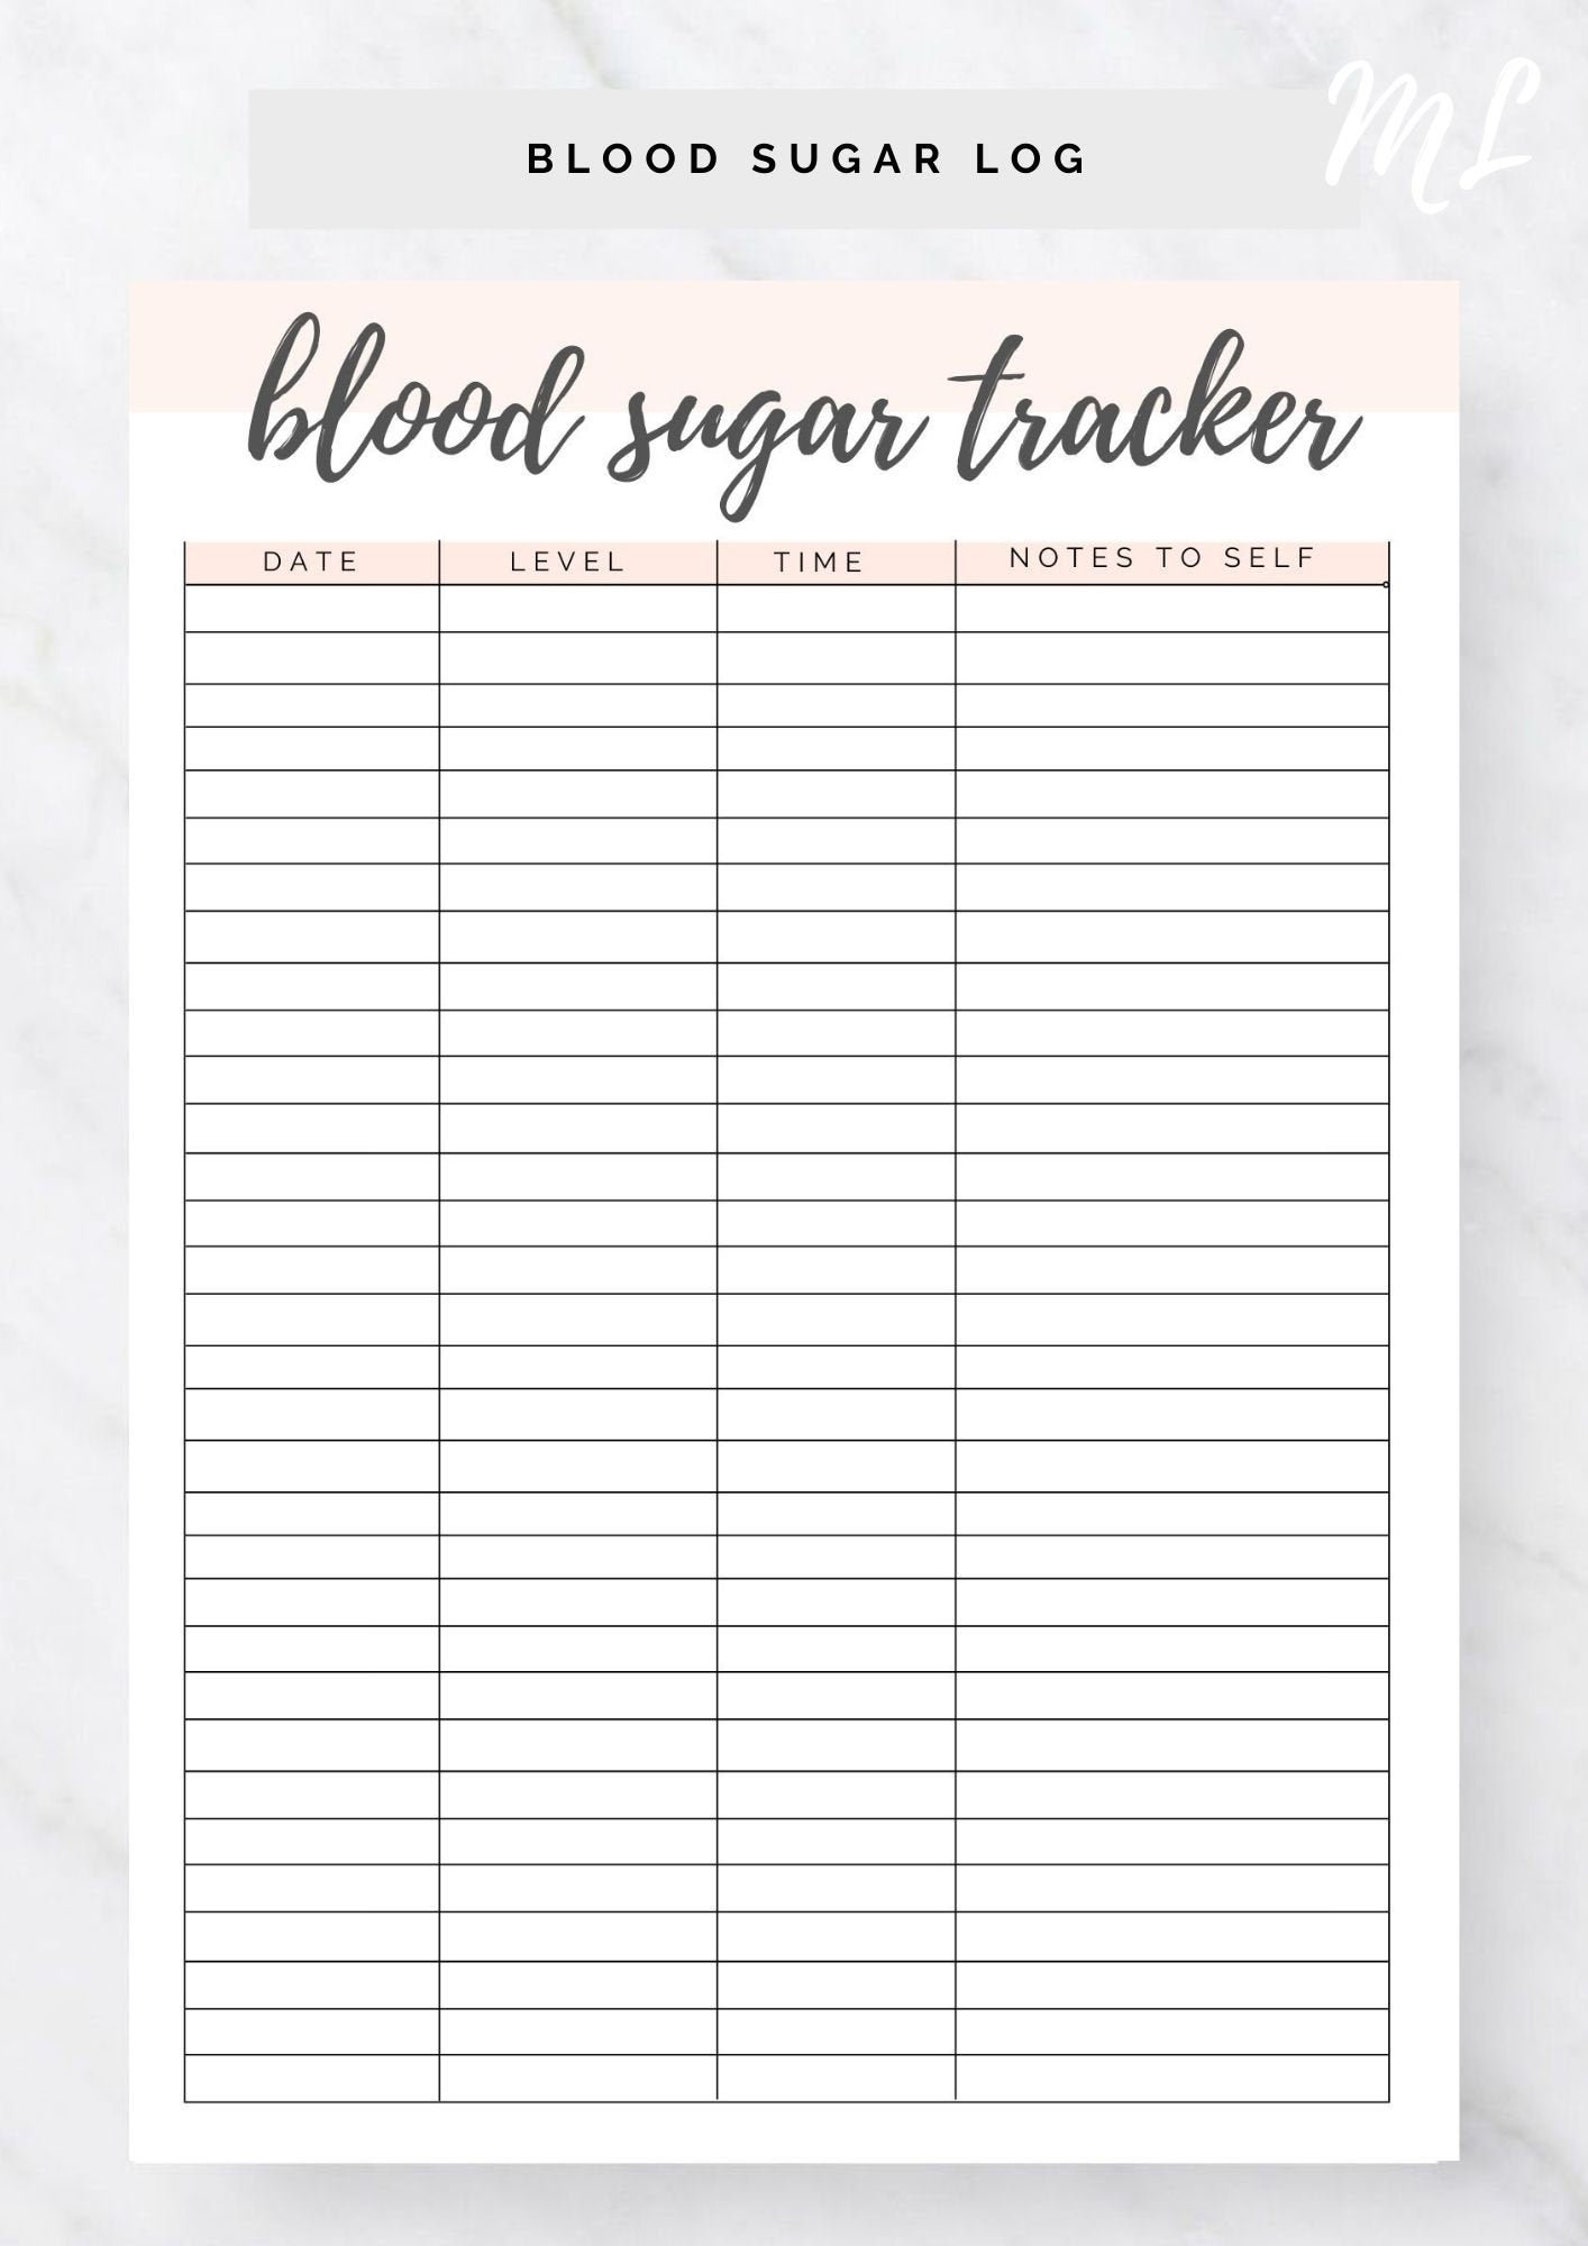 blood-sugar-log-printable-blood-sugar-reading-tracker-blood-glucose-tracker-diabetes-printable